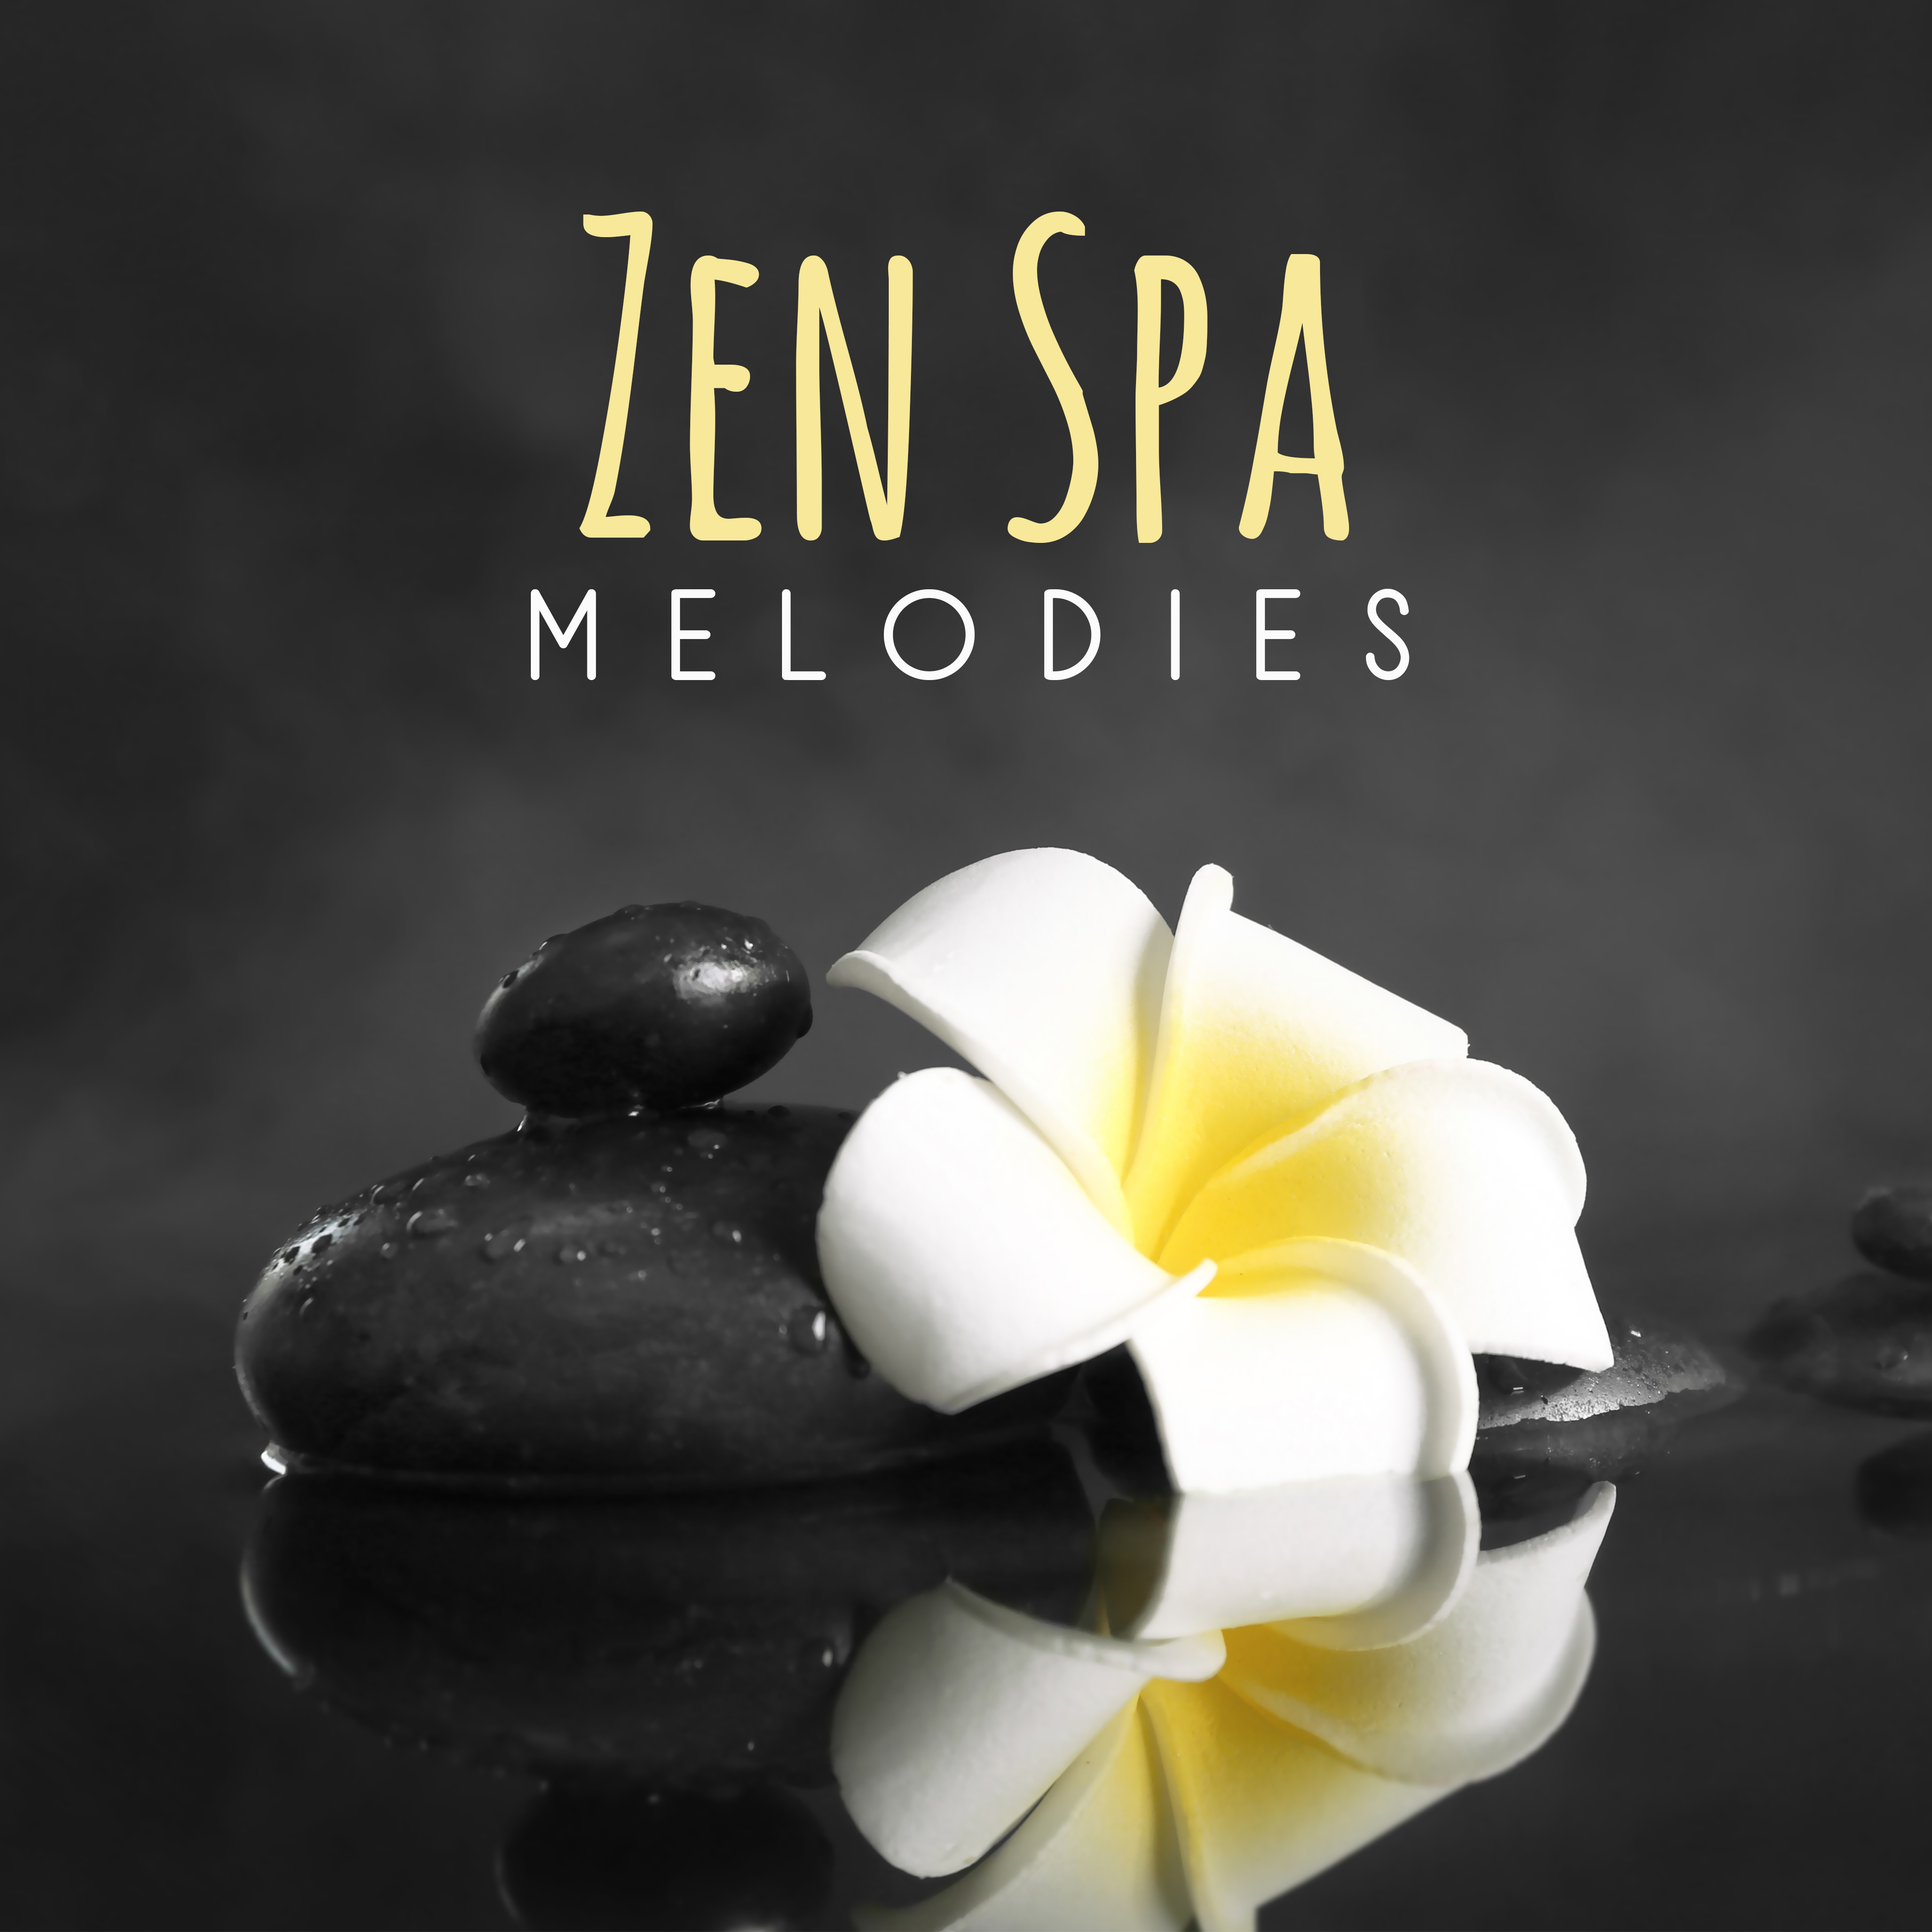 Zen Spa Melodies